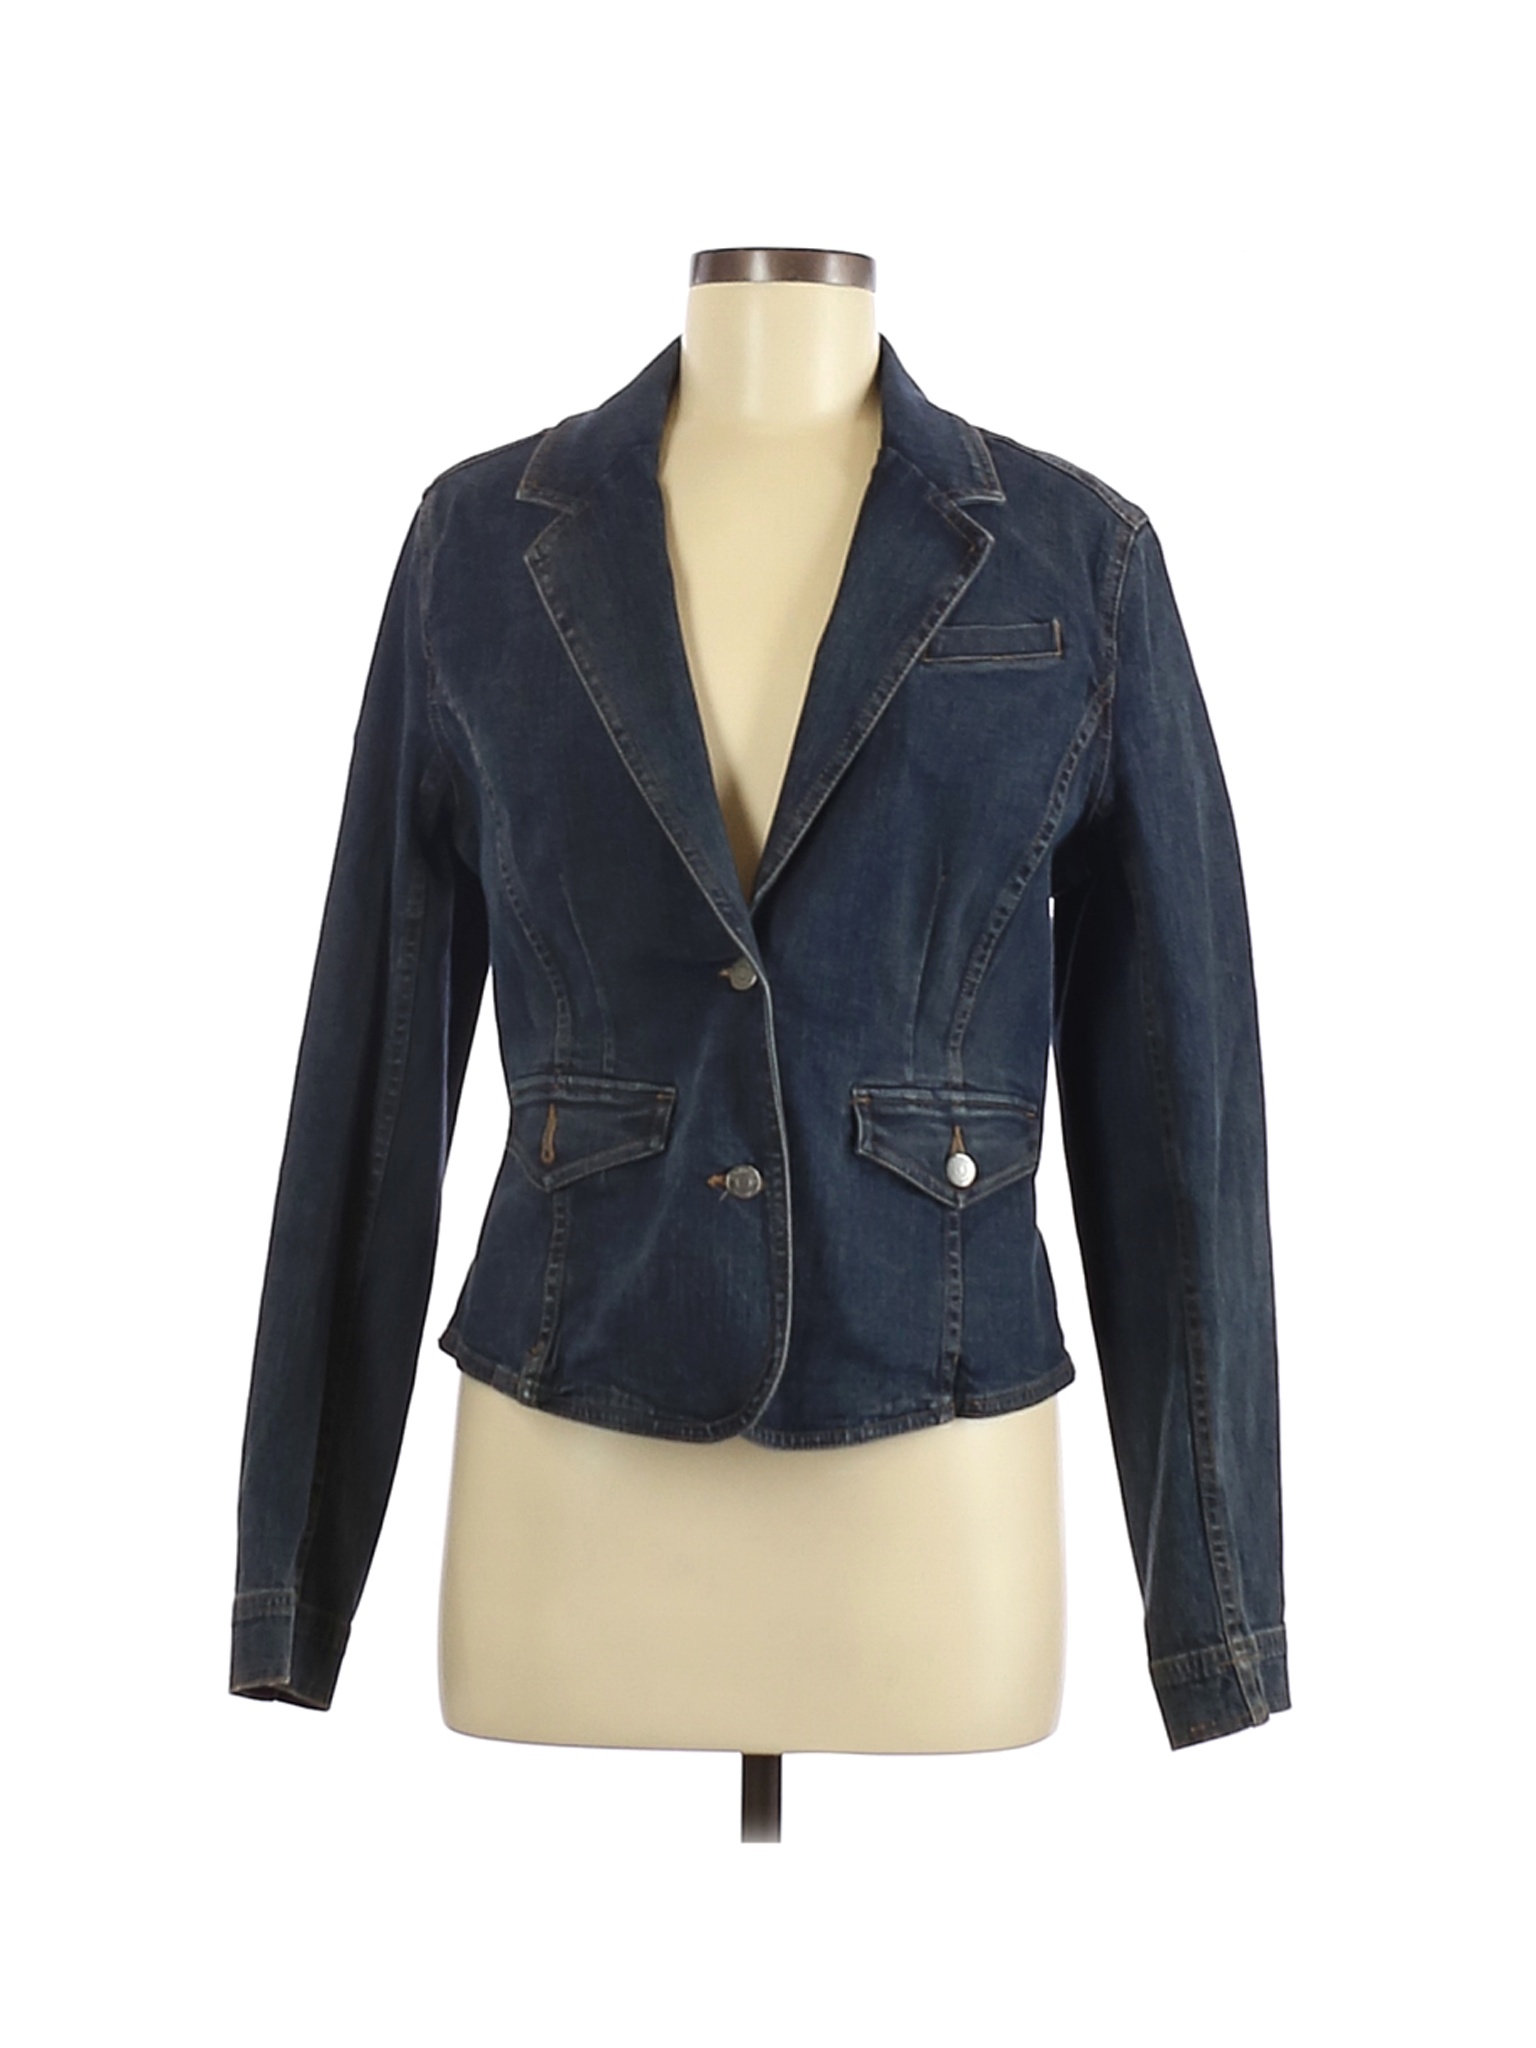 SONOMA life + style Women Blue Denim Jacket M | eBay